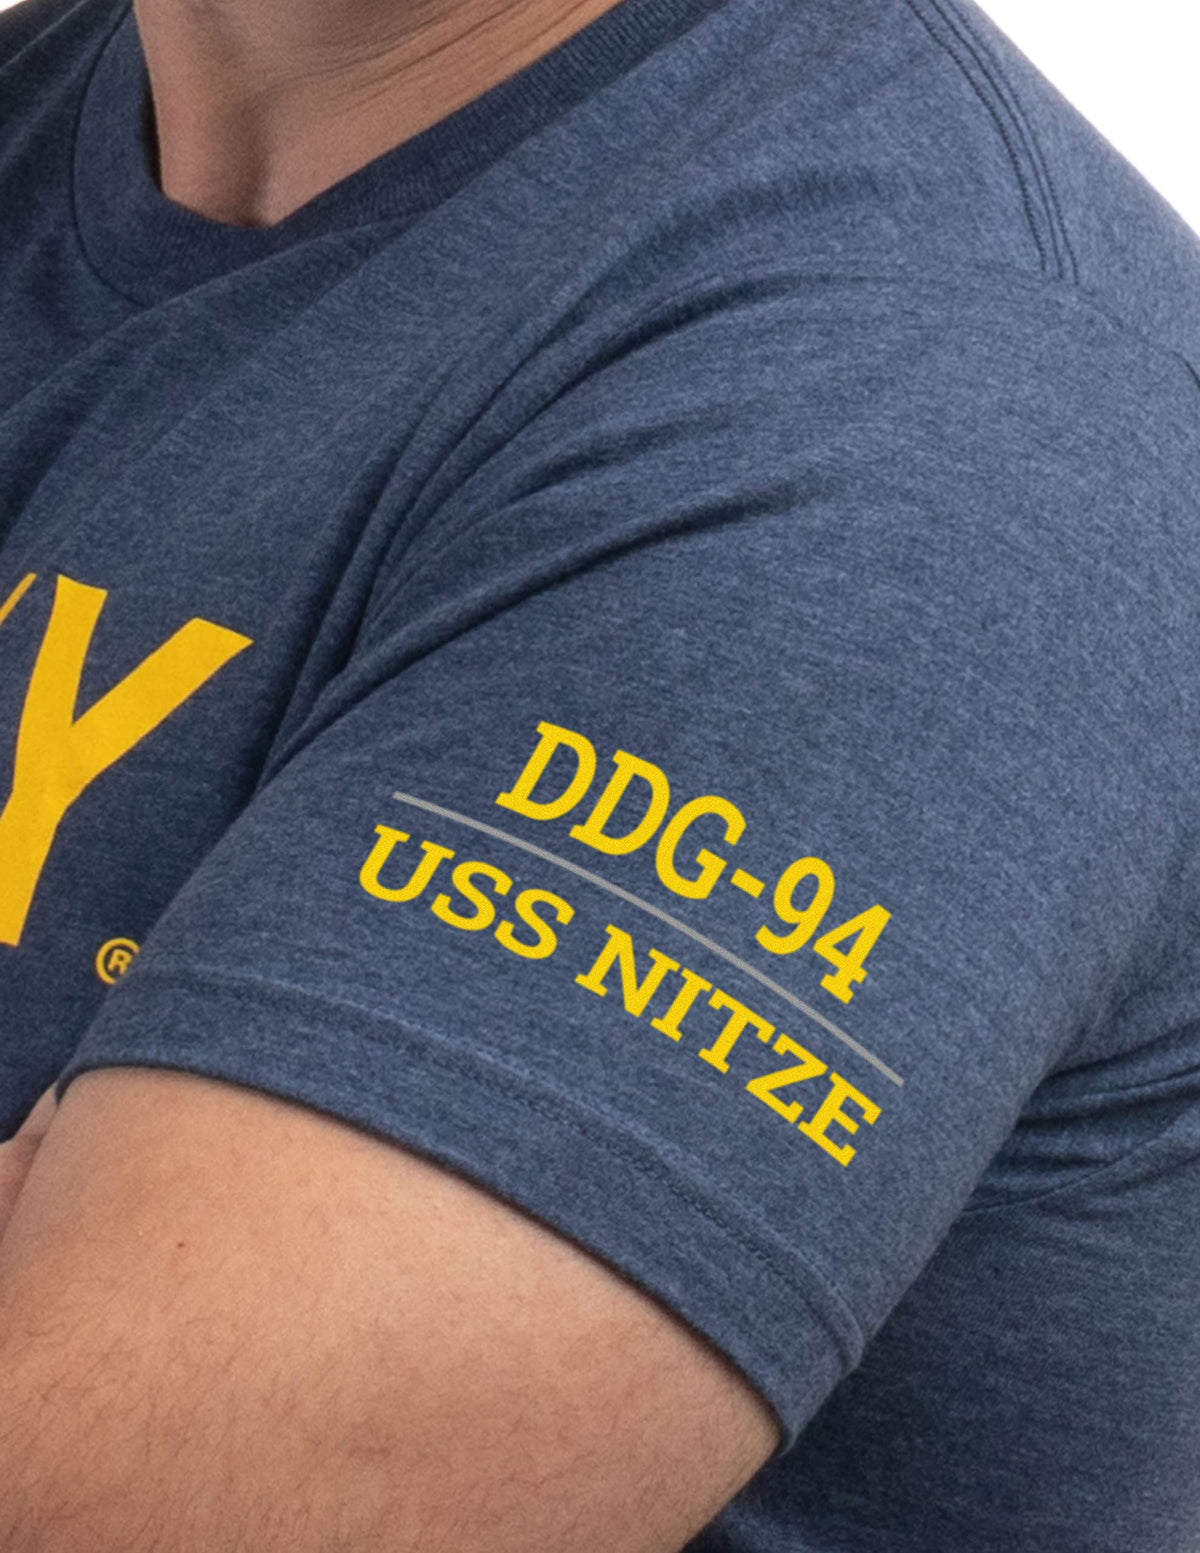 USS Nitze, DDG-94 | U.S. Navy Sailor Veteran USN United States Naval T-shirt for Men Women